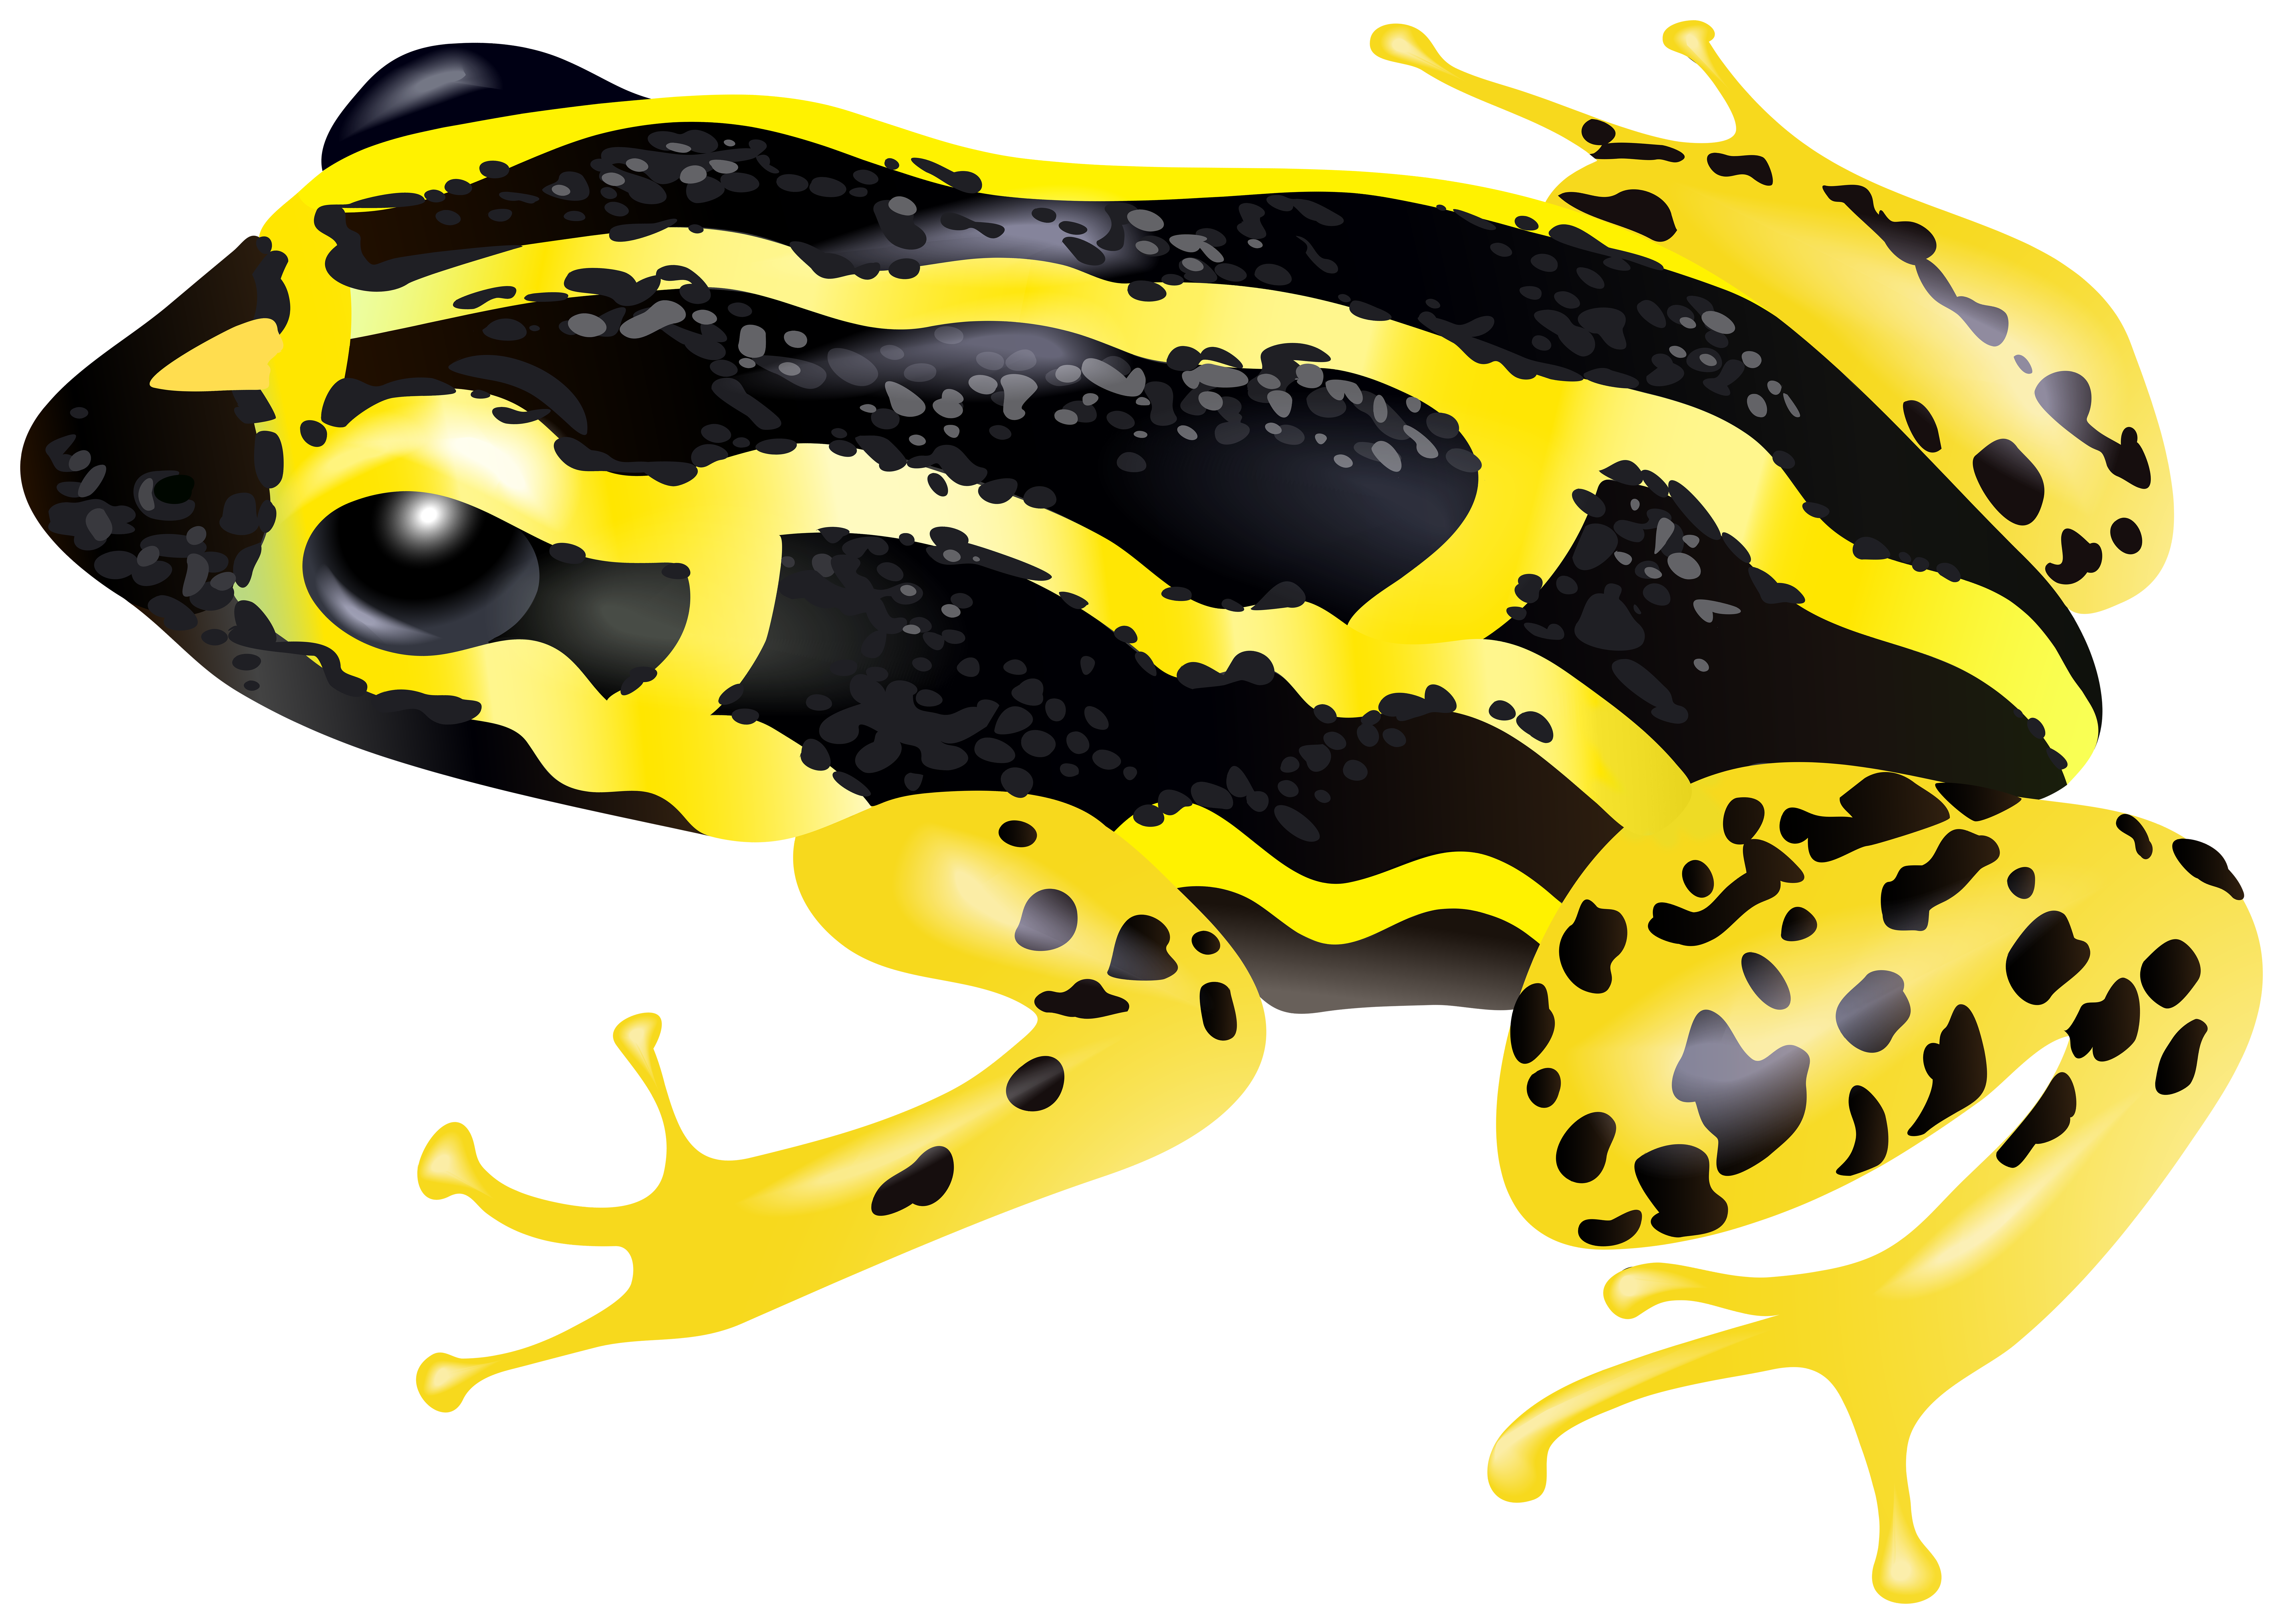 yellow frog clip art